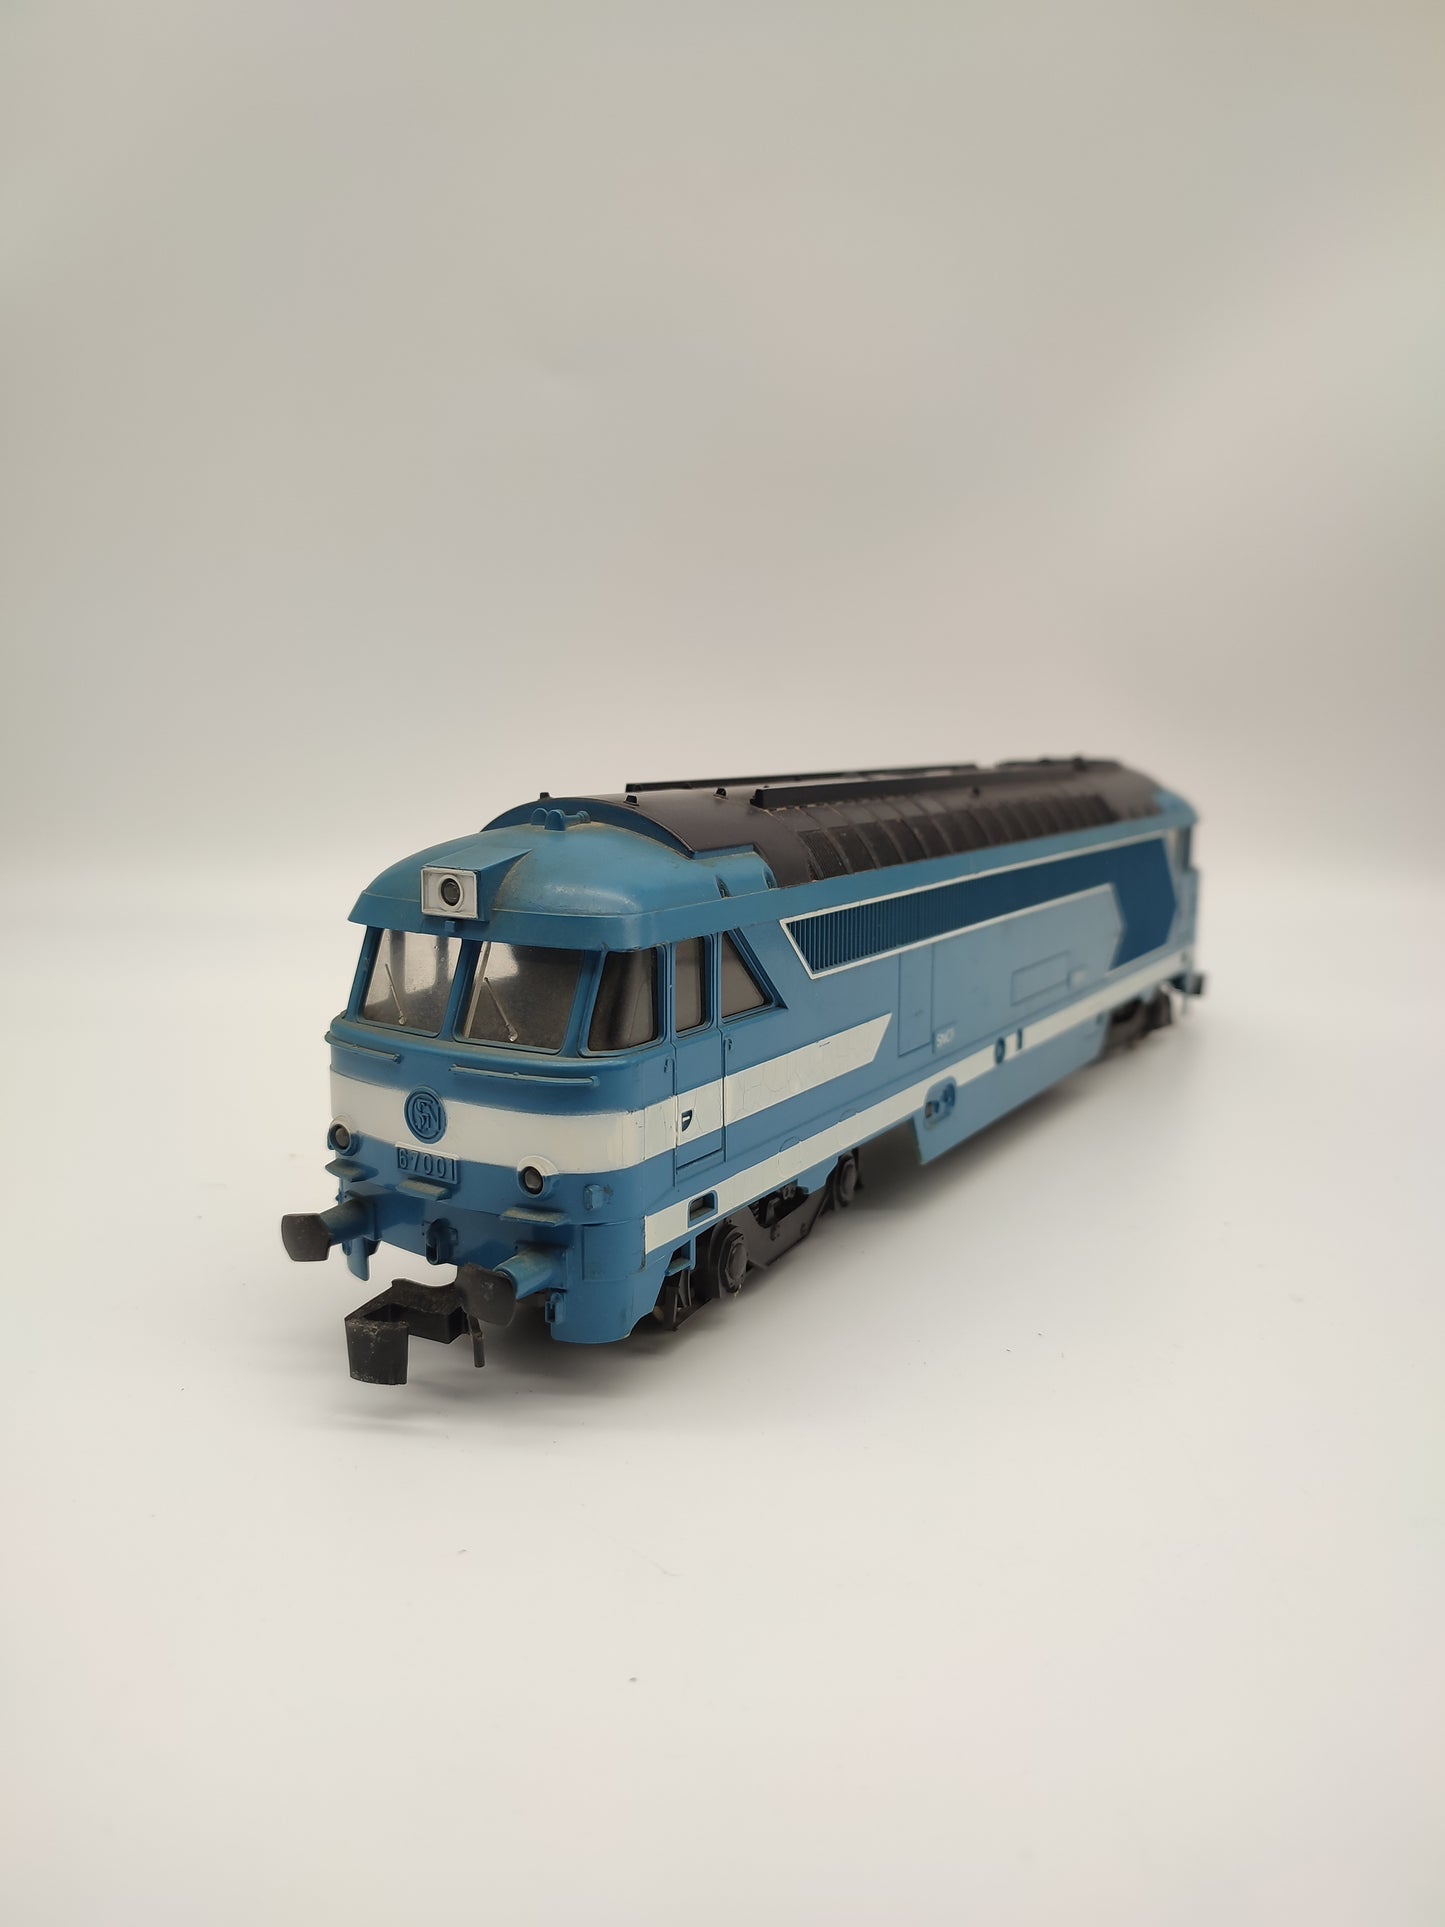 69845 Set locomotiva Lima + 2 vagoni, binari e trasformatore